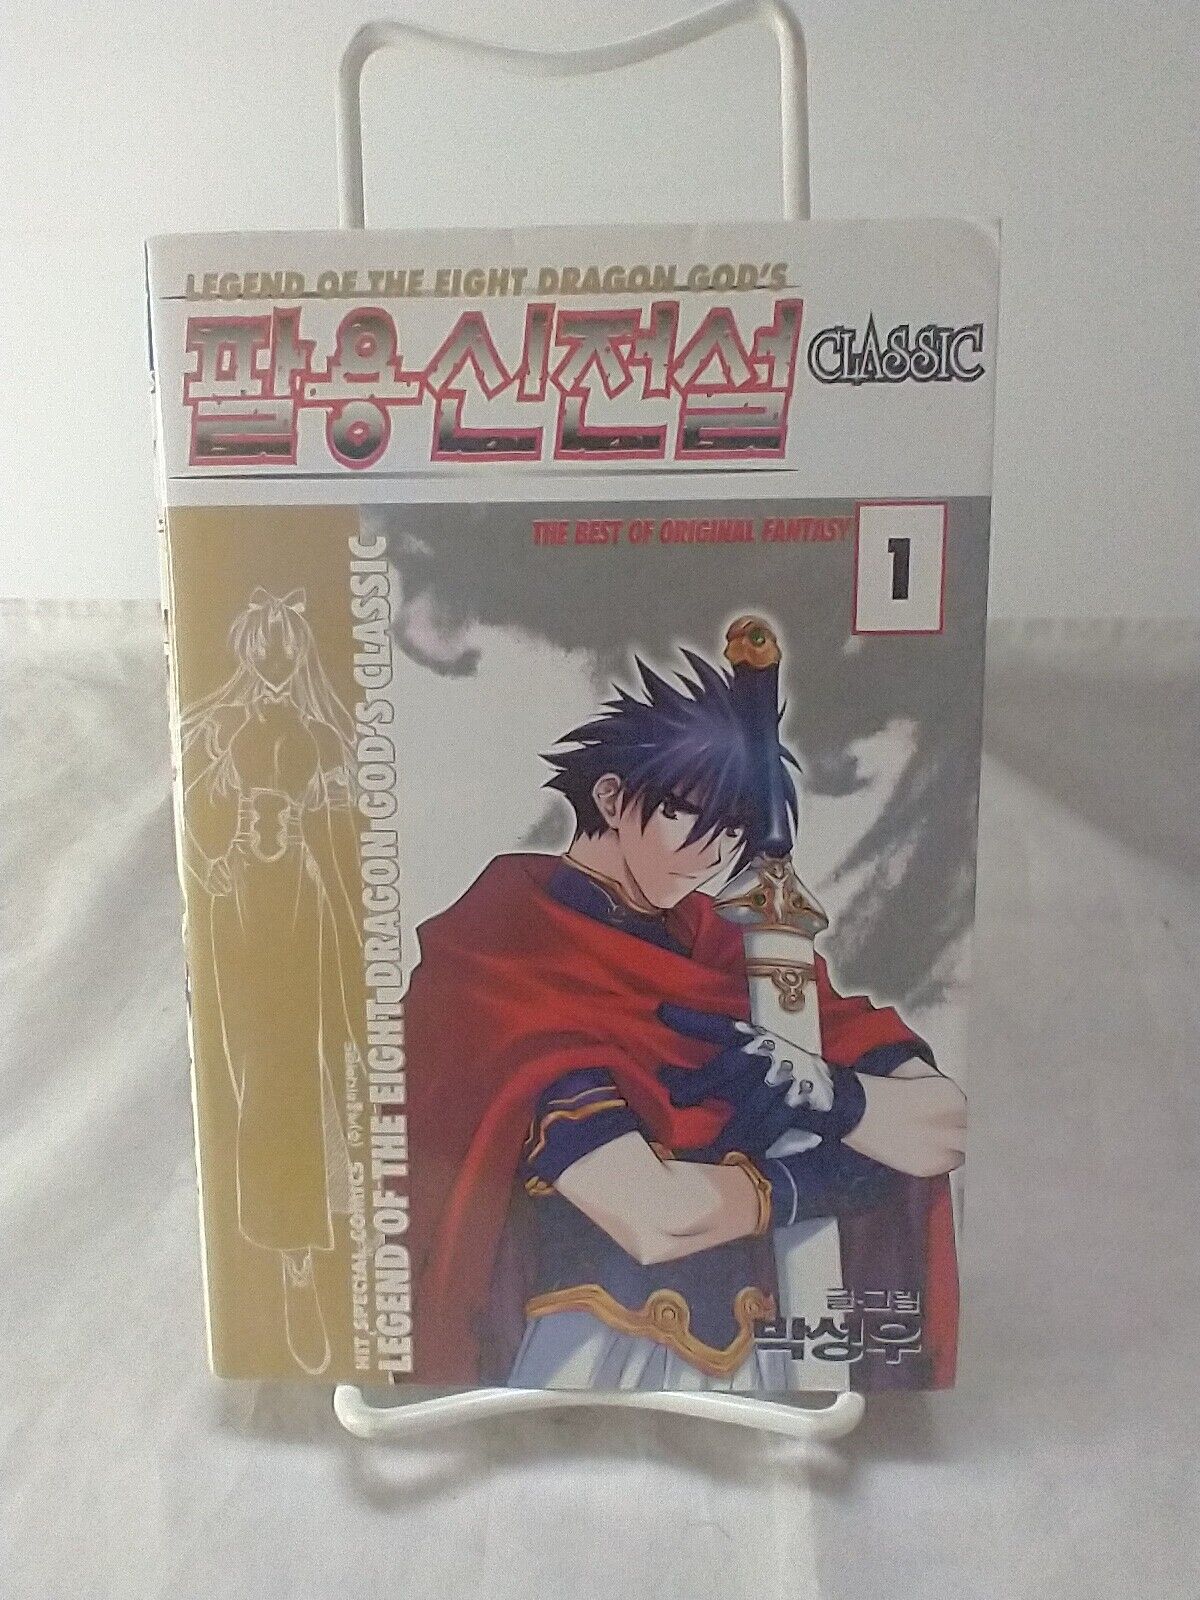 Legend of the Eight Dragon God\'s Classic Volume 1 Korean Manga Paperback